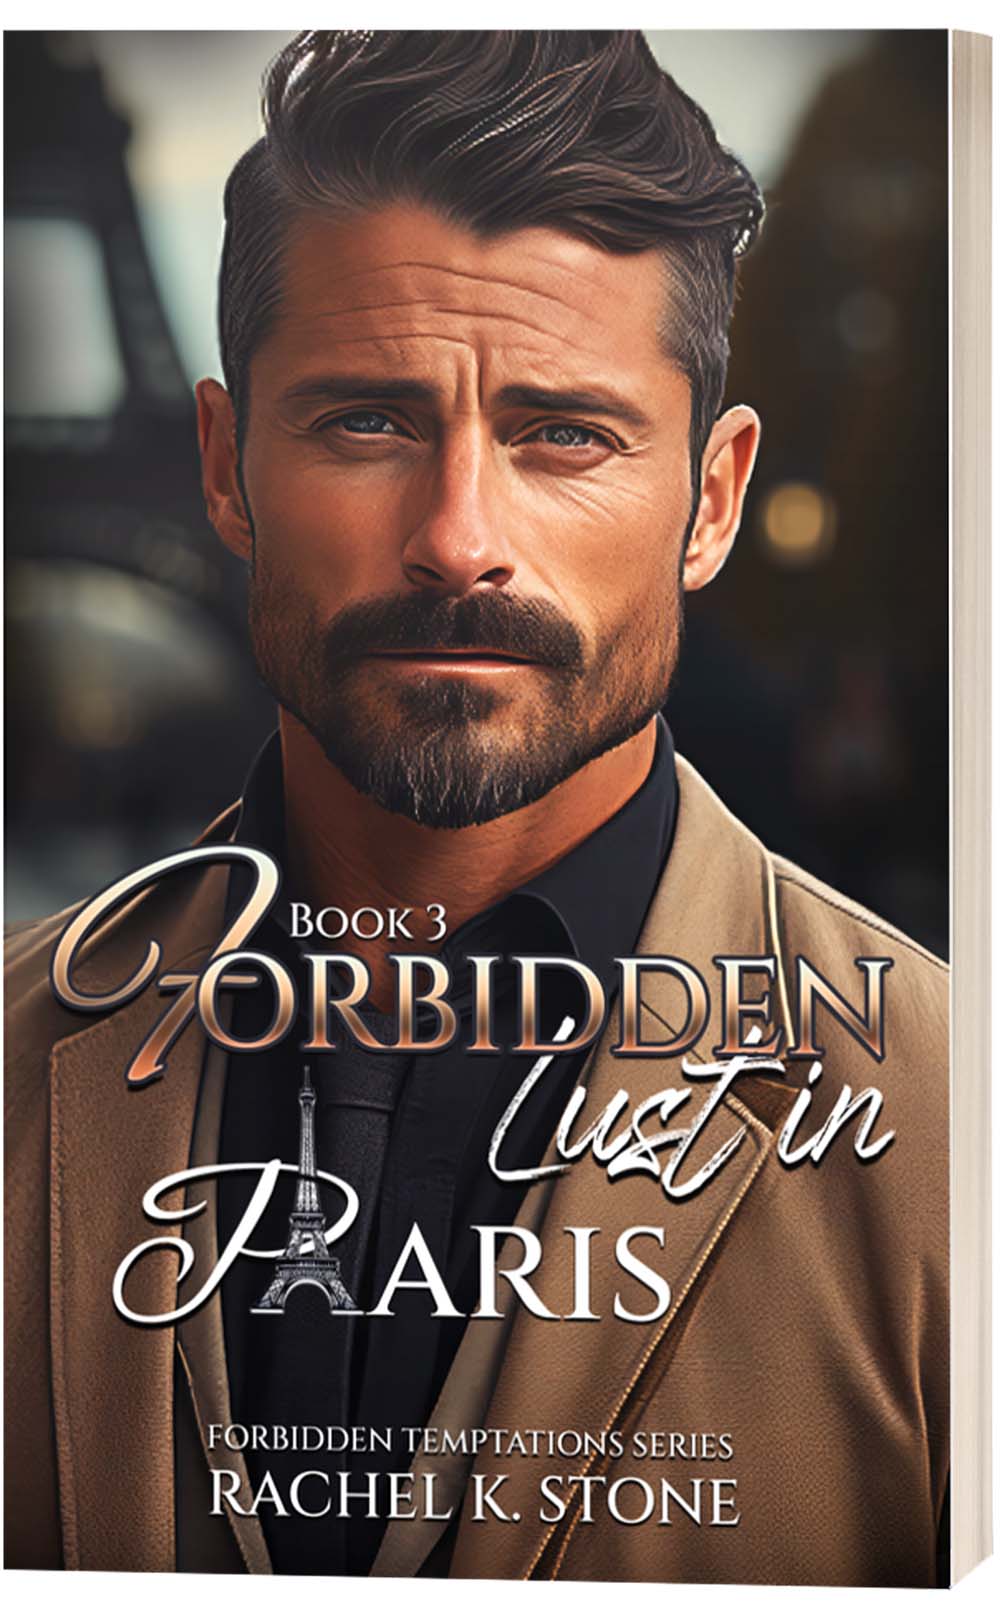 Forbidden Lust in Paris (Forbidden Temptations Series, Large Print Paperback Book 3)